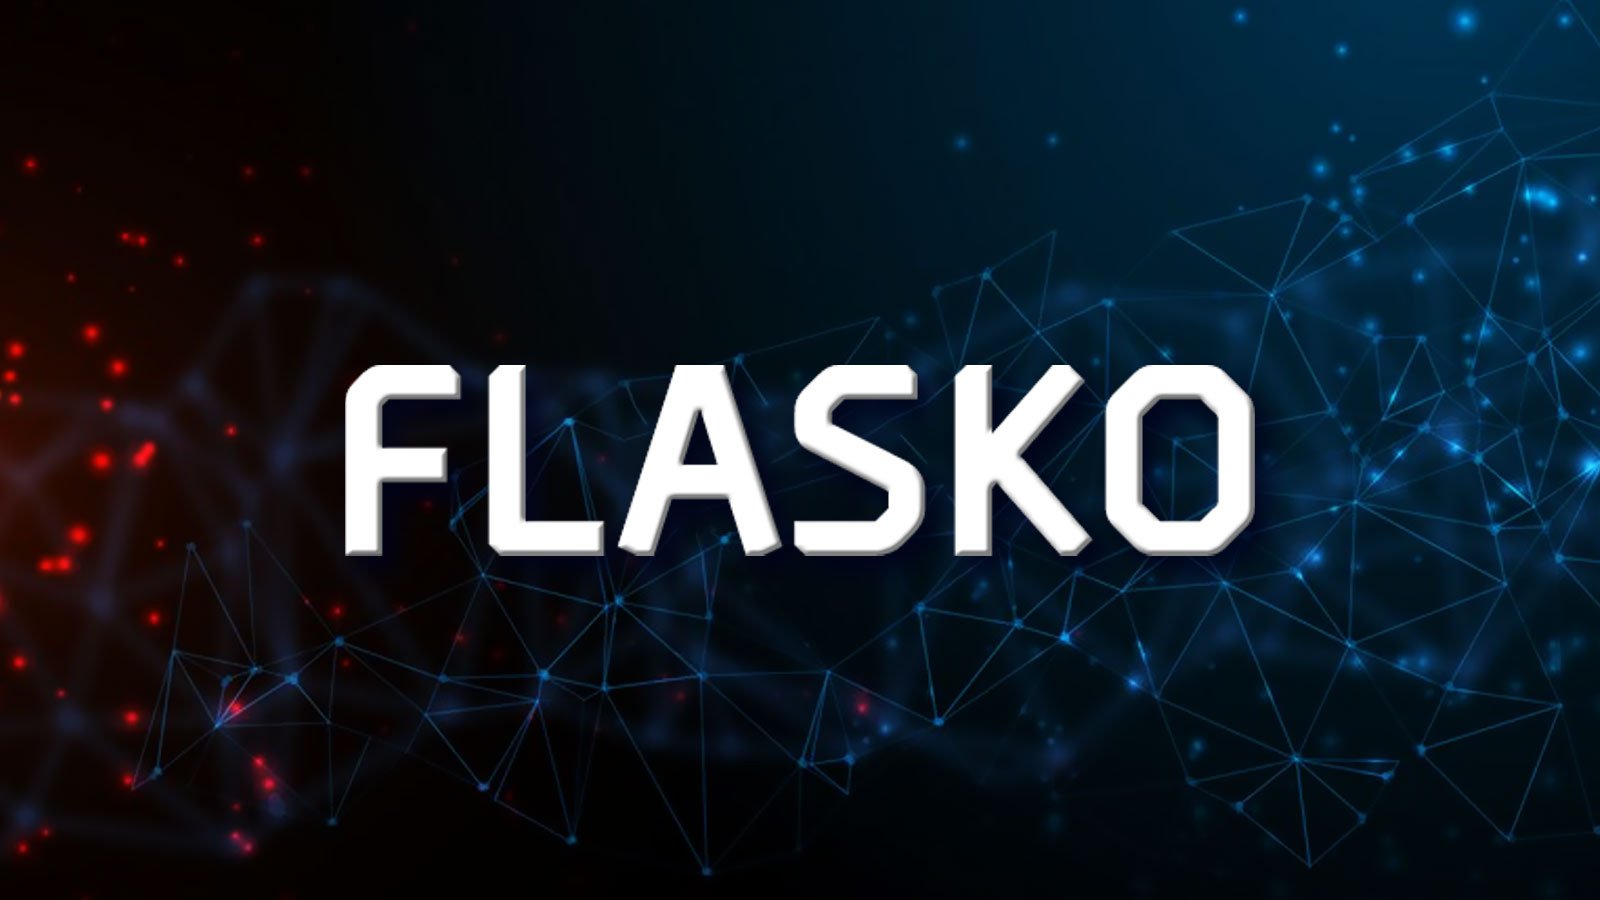 Flasko (FLSK) Goes Live as an Option for Litecoin (LTC), Cardano (ADA) Enthusiasts